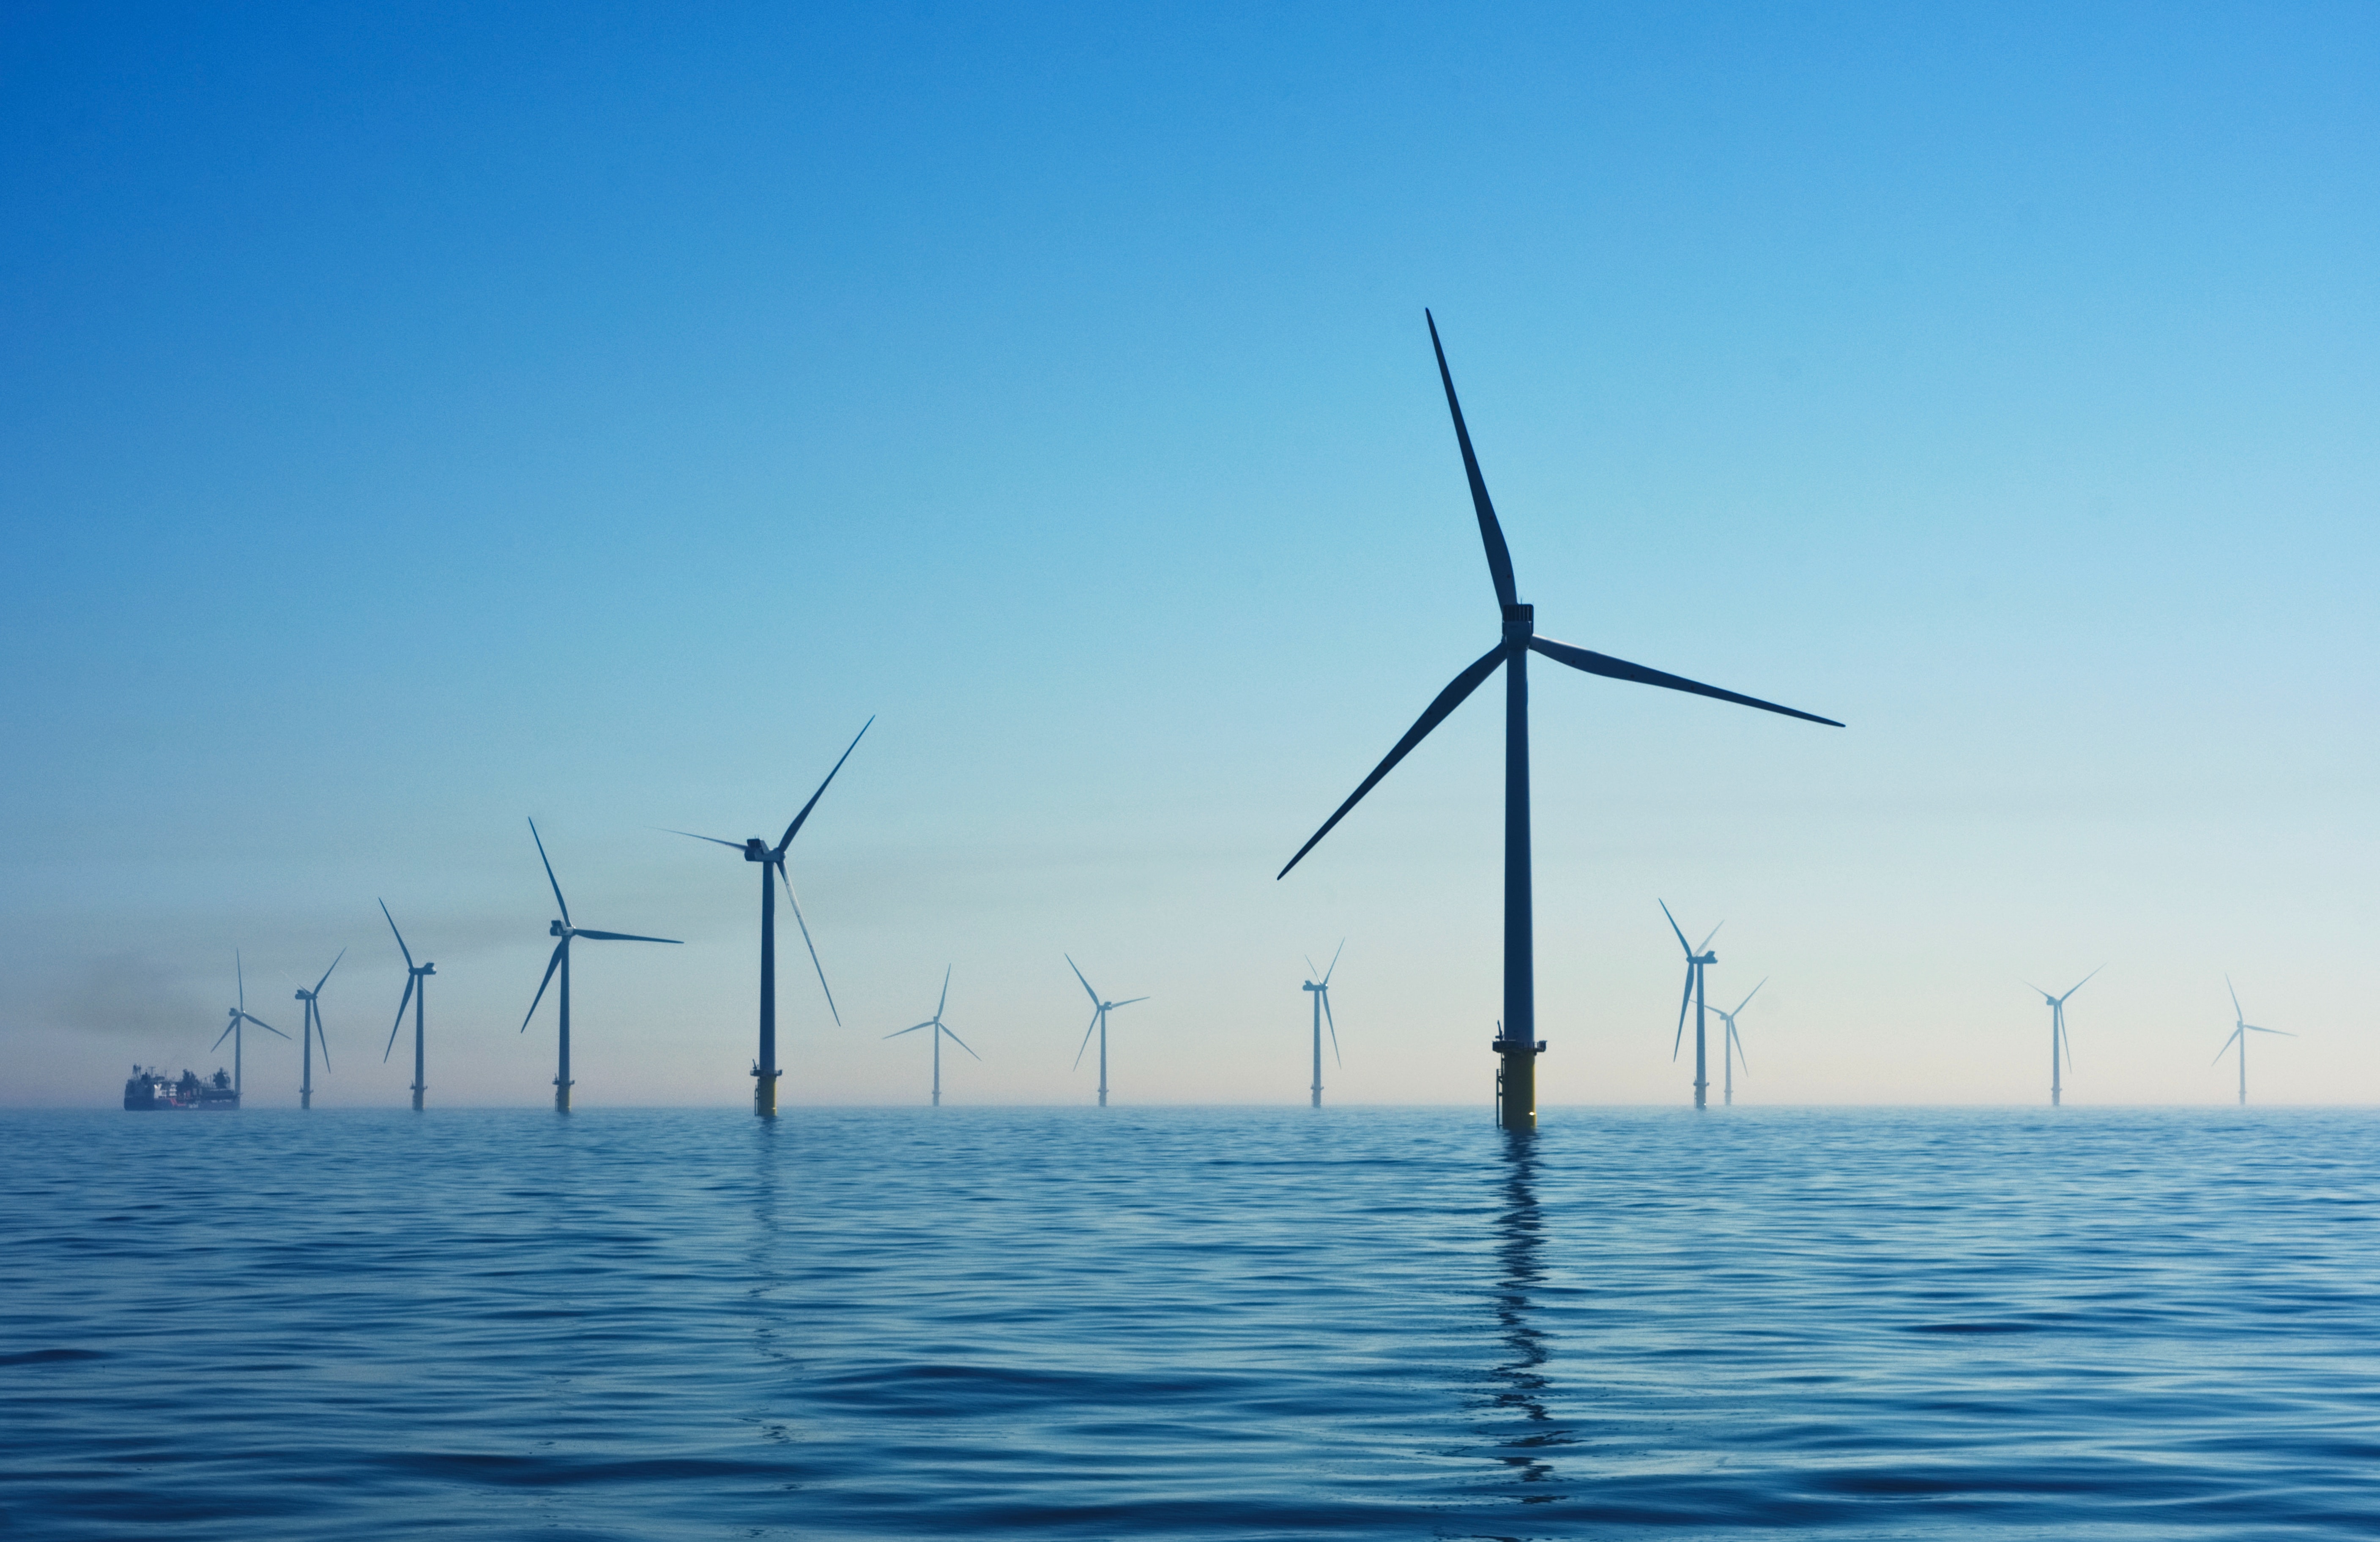 Rampion offshore wind farm, UK, by Nicolas Doherty https://unsplash.com/@nrdoherty